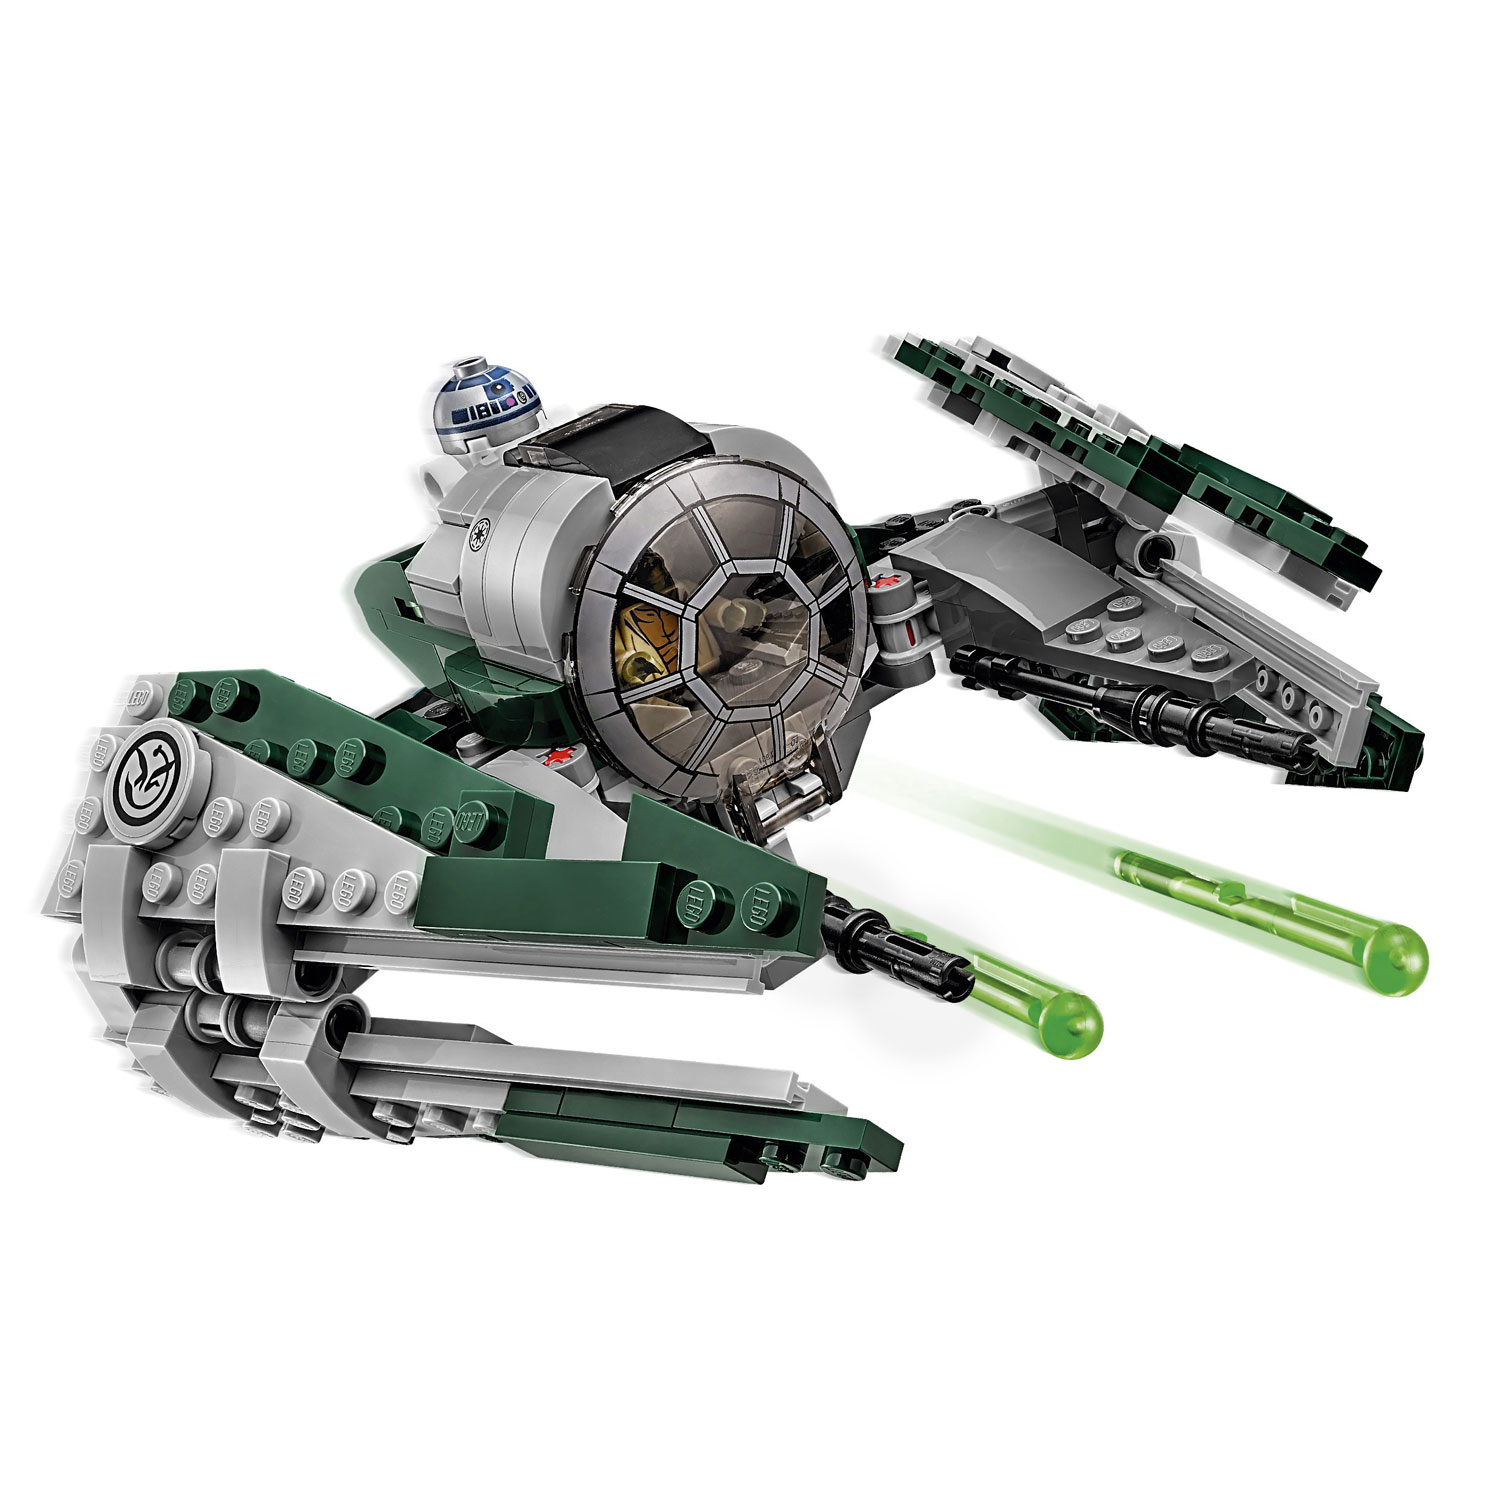 LEGO Star Wars 75168 Yoda's Jedi Starfighter